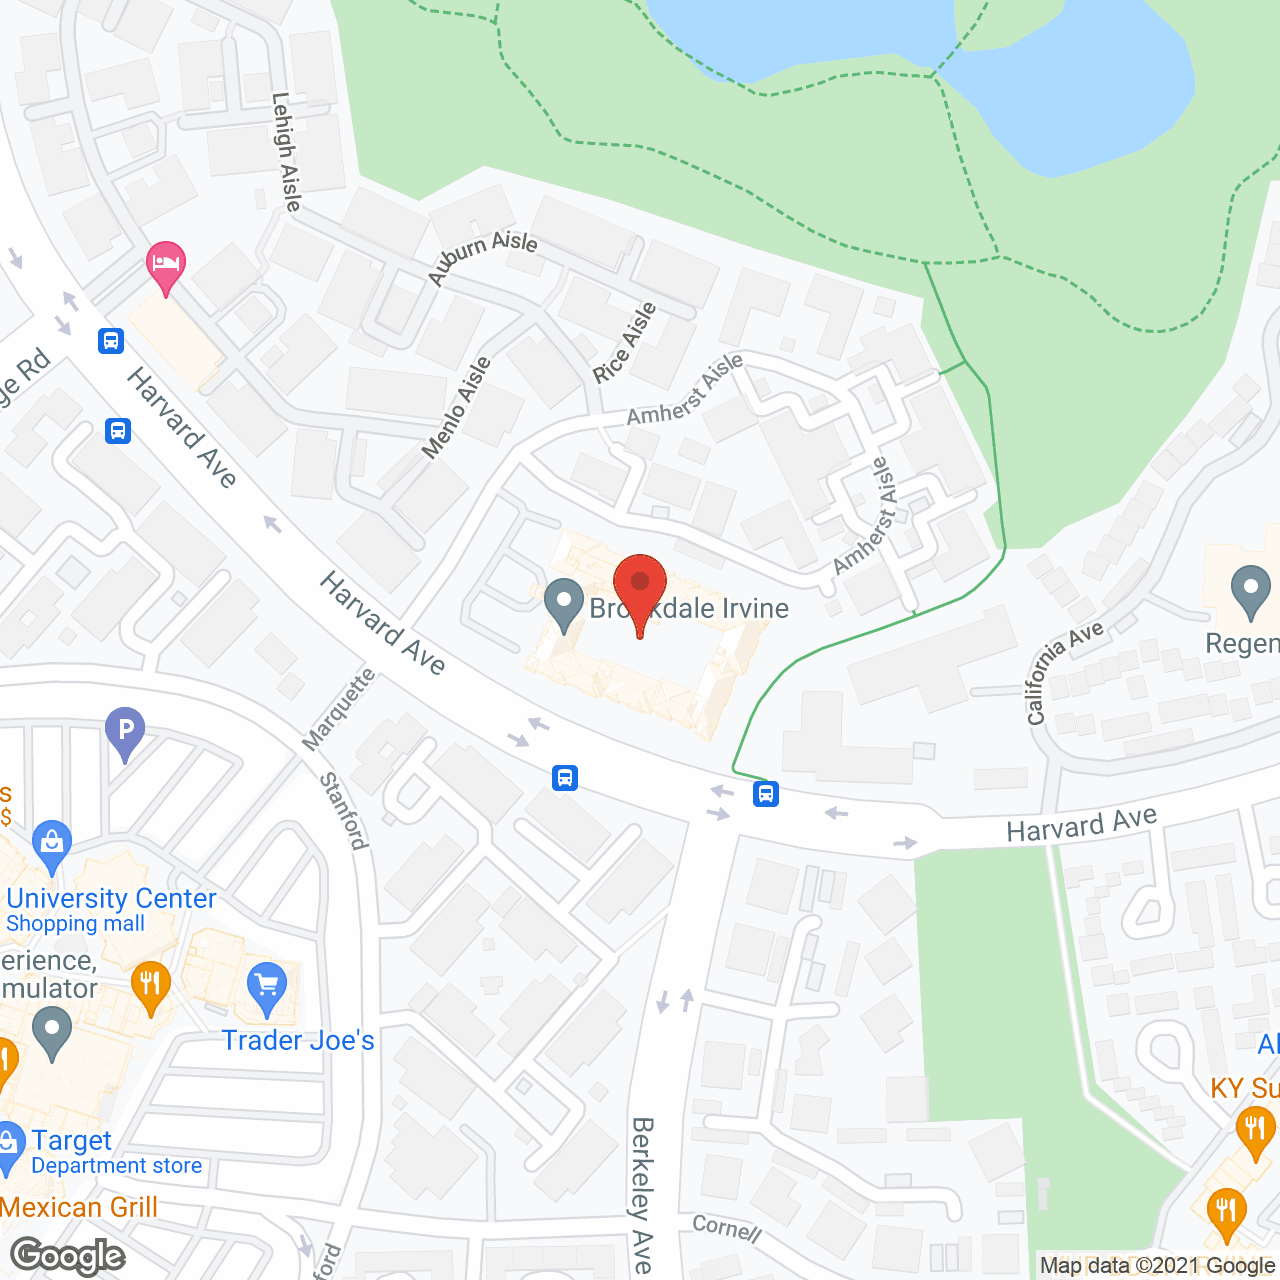 Brookdale Irvine in google map